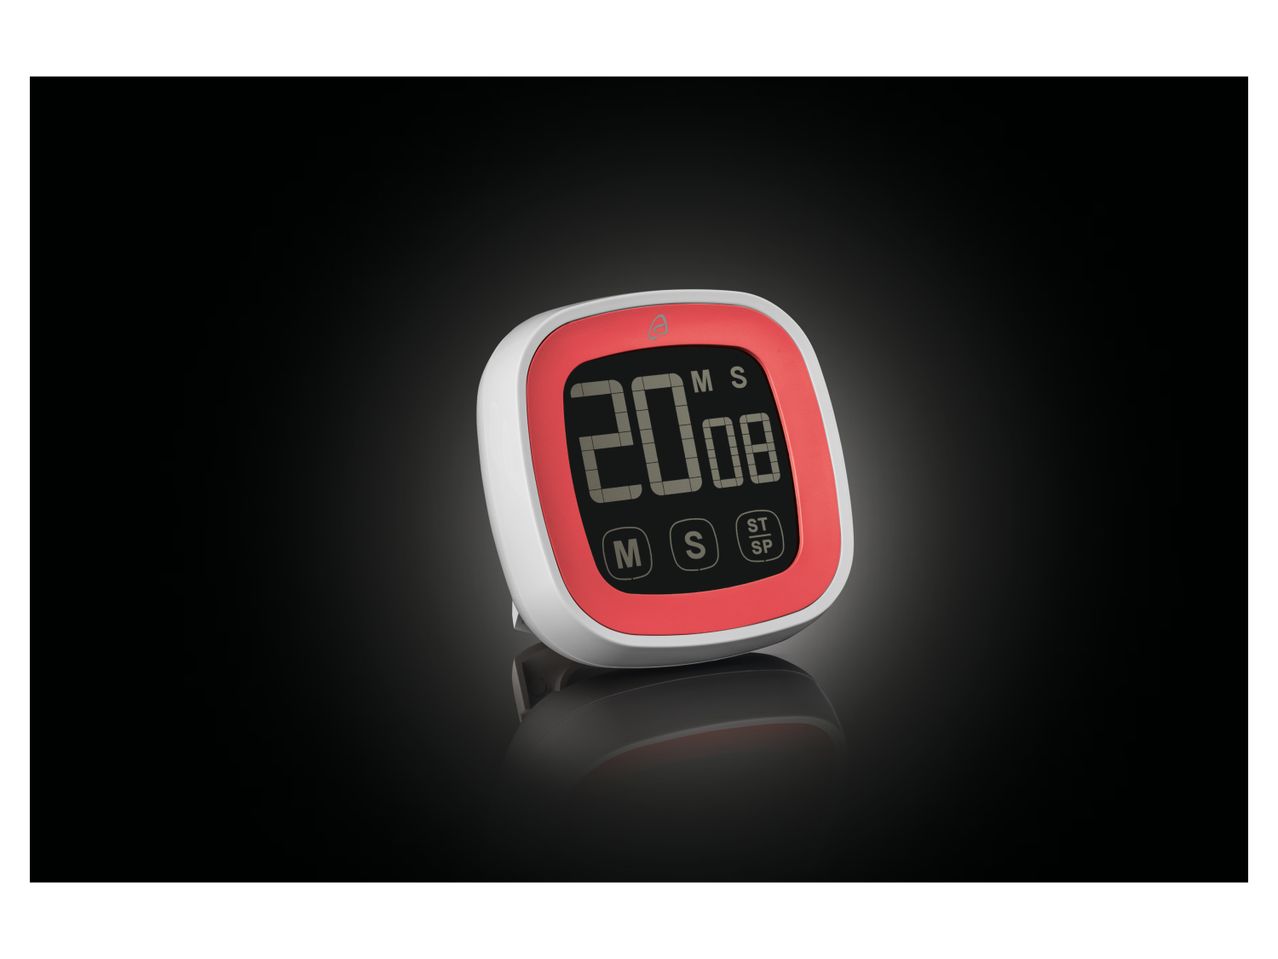 Timer digitale Auriol, prezzo 3.99 EUR 
Timer digitale 
- Dimensioni 7,5 x 7,5 ...